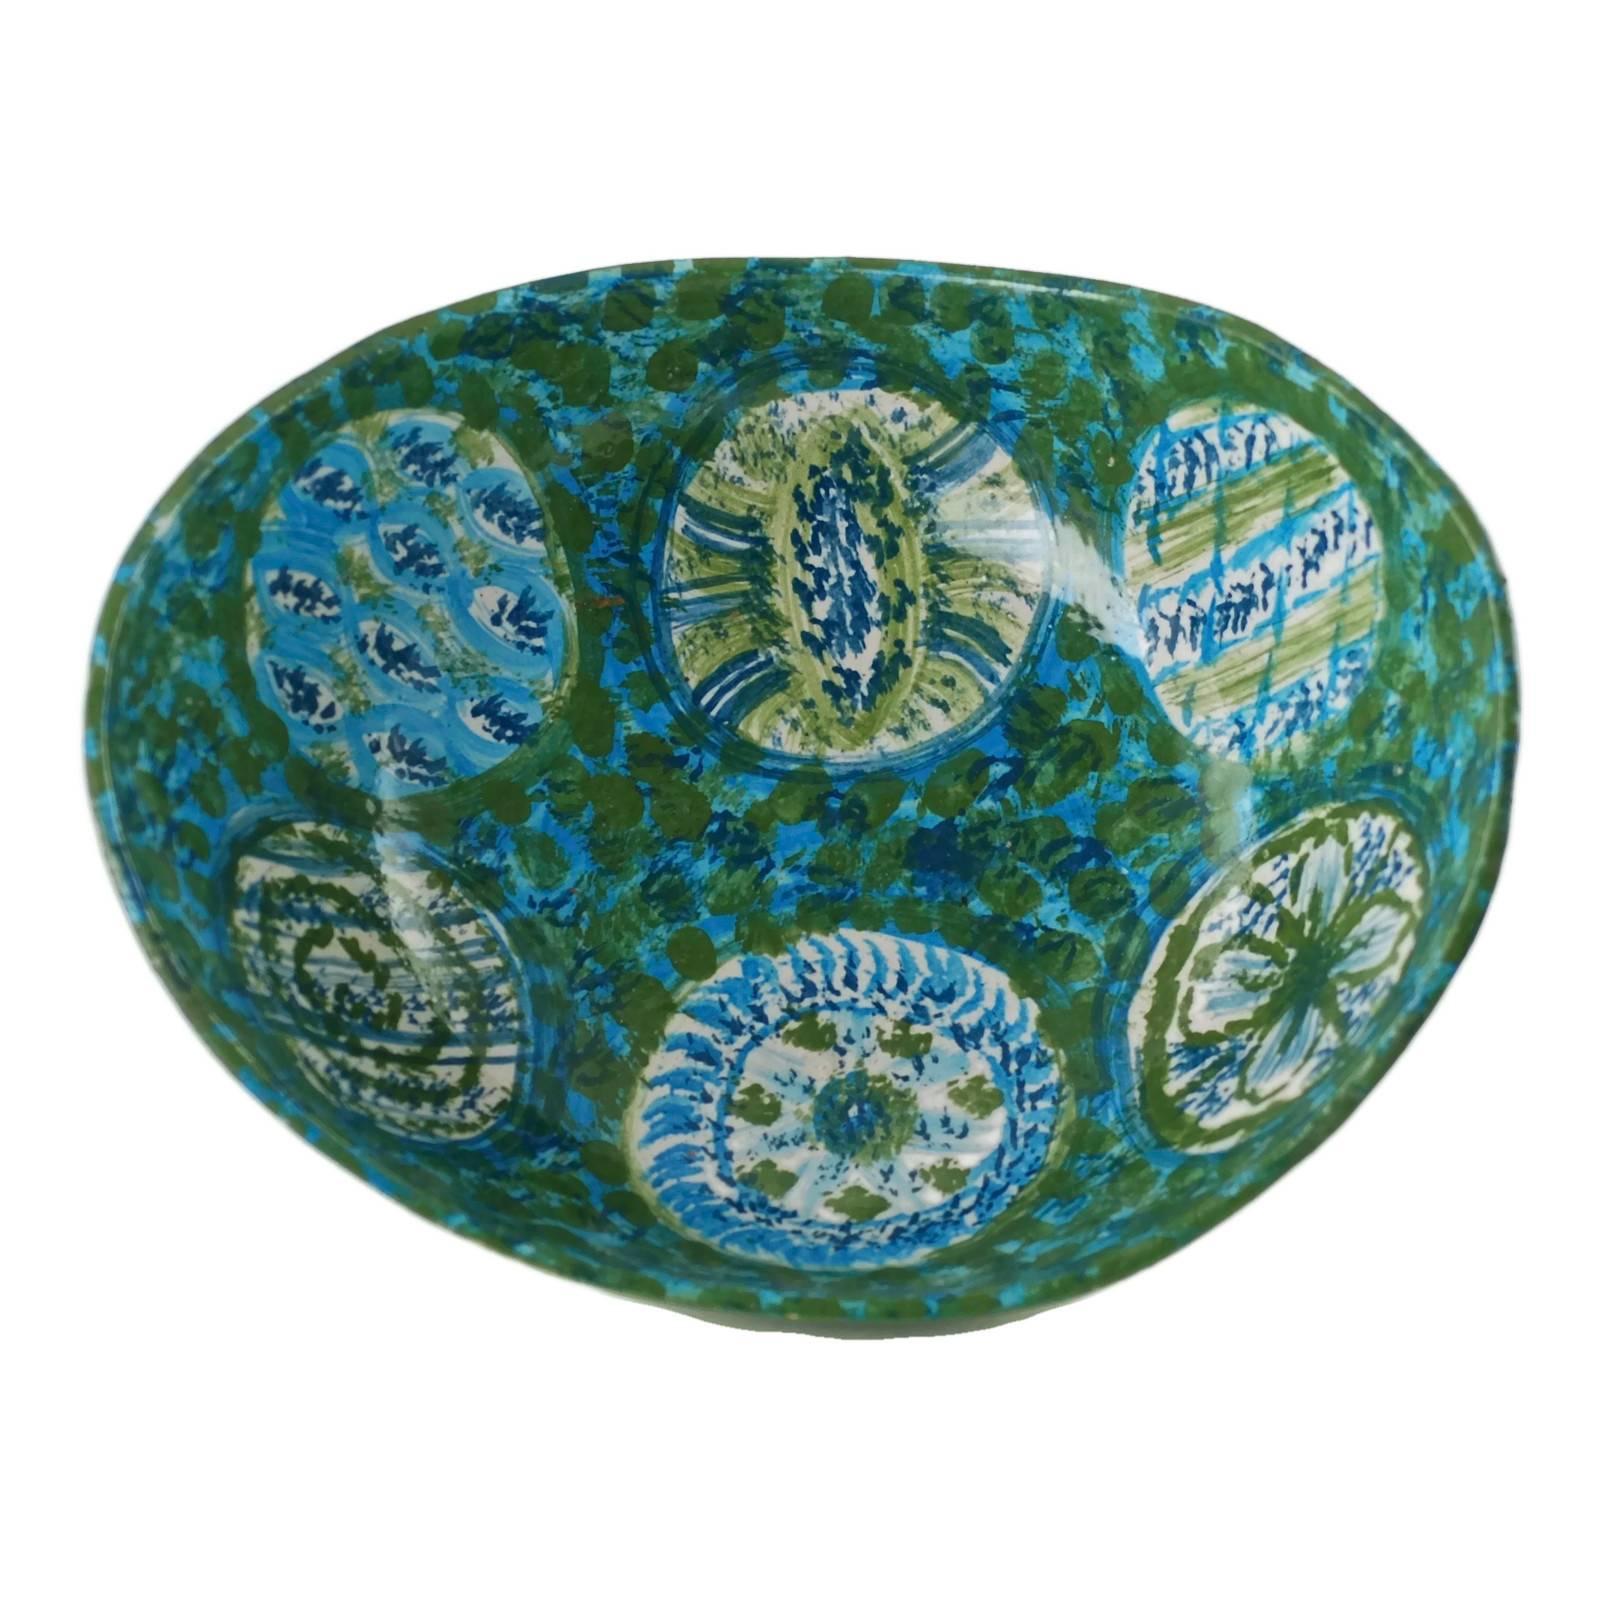 Midcentury Raymor Hand-Painted Italian Ceramic Centerpiece Bowl